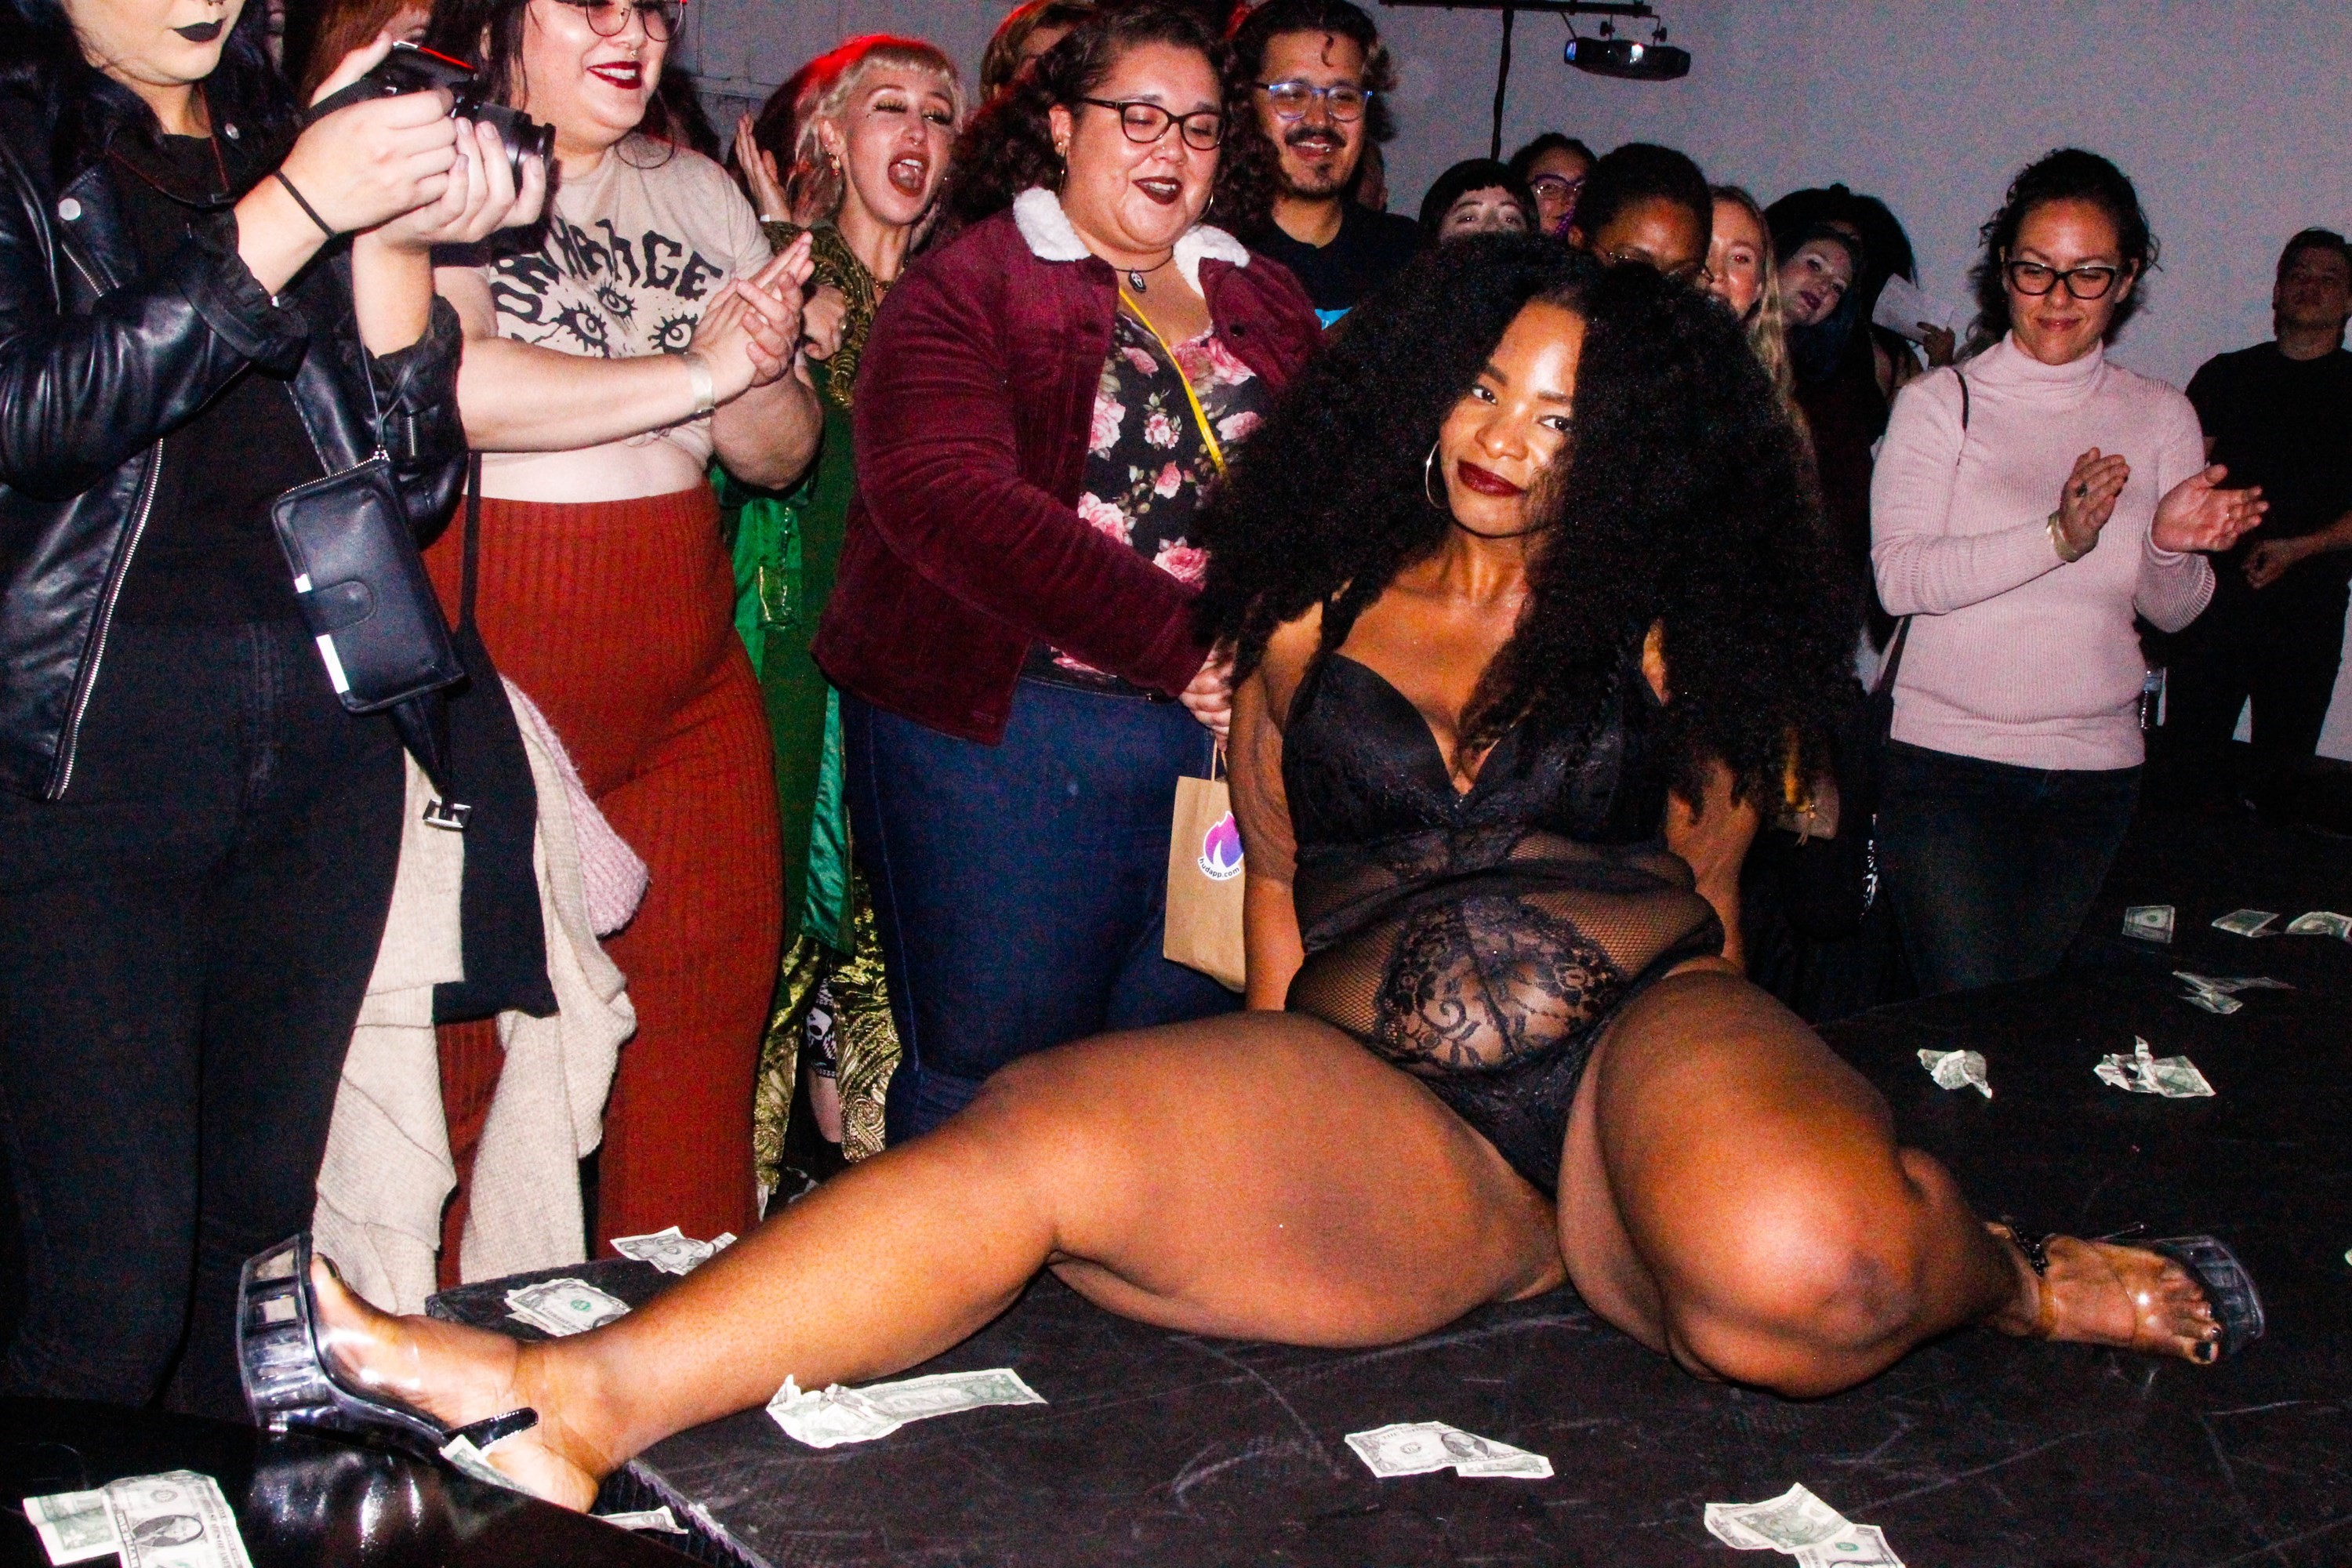 The body positive LA strip show founded by plus size women Dazed image photo